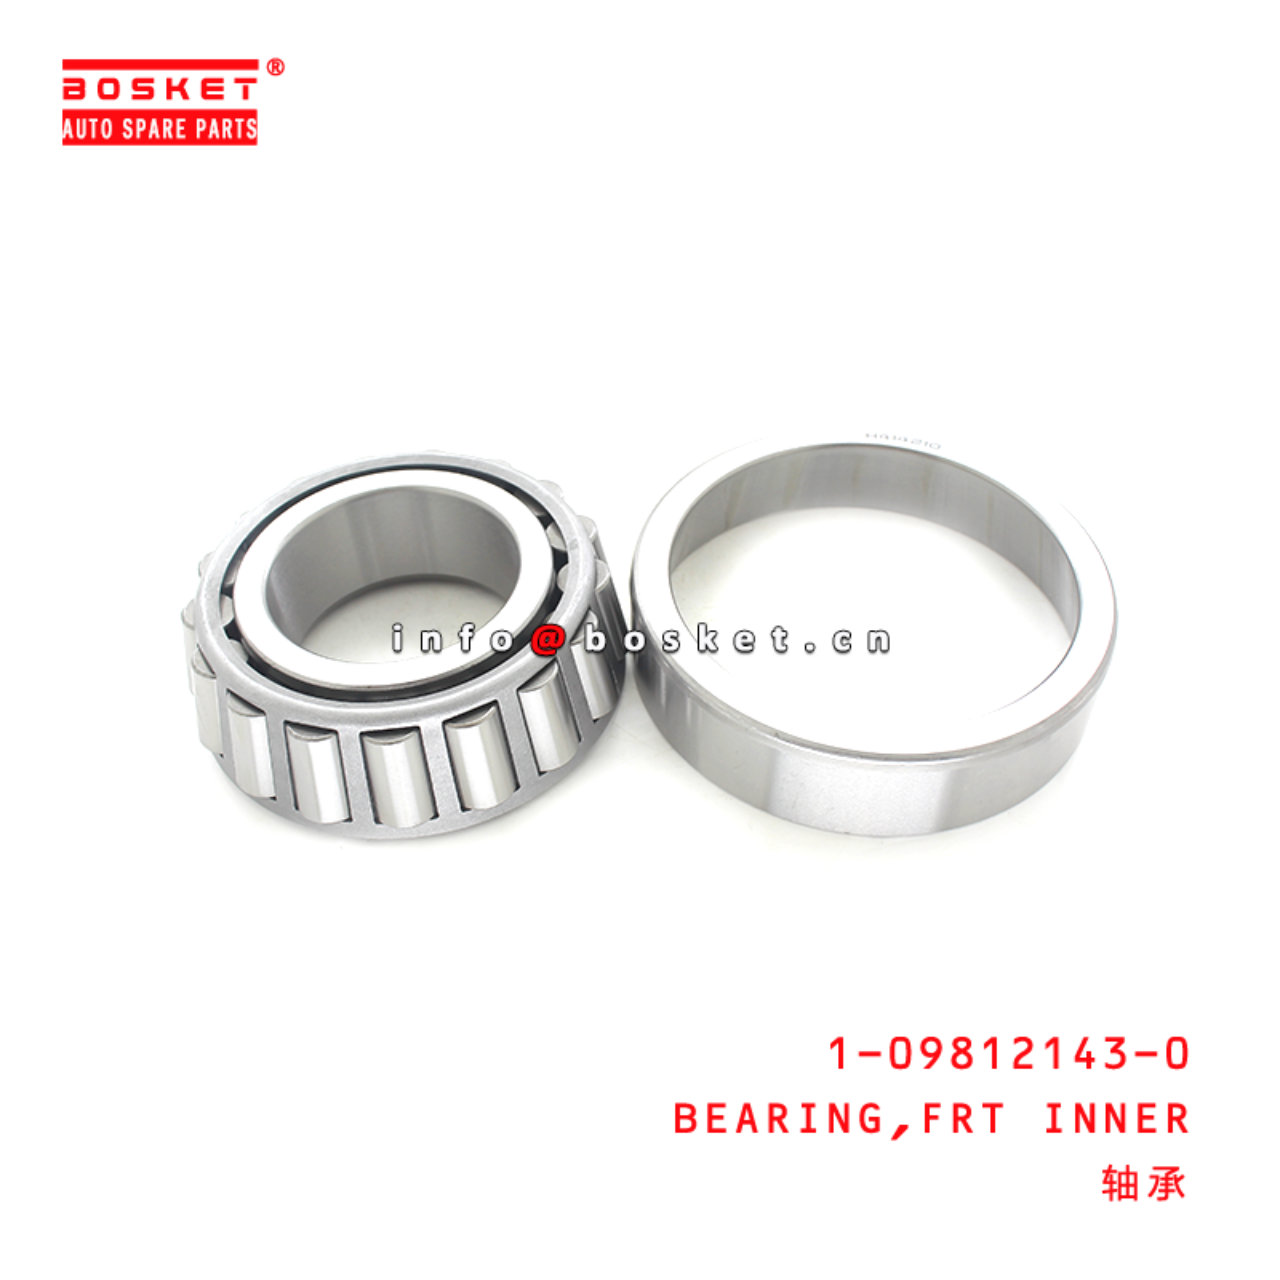 1-09812143-0 Front Inner Bearing Suitable for ISUZU HINO700